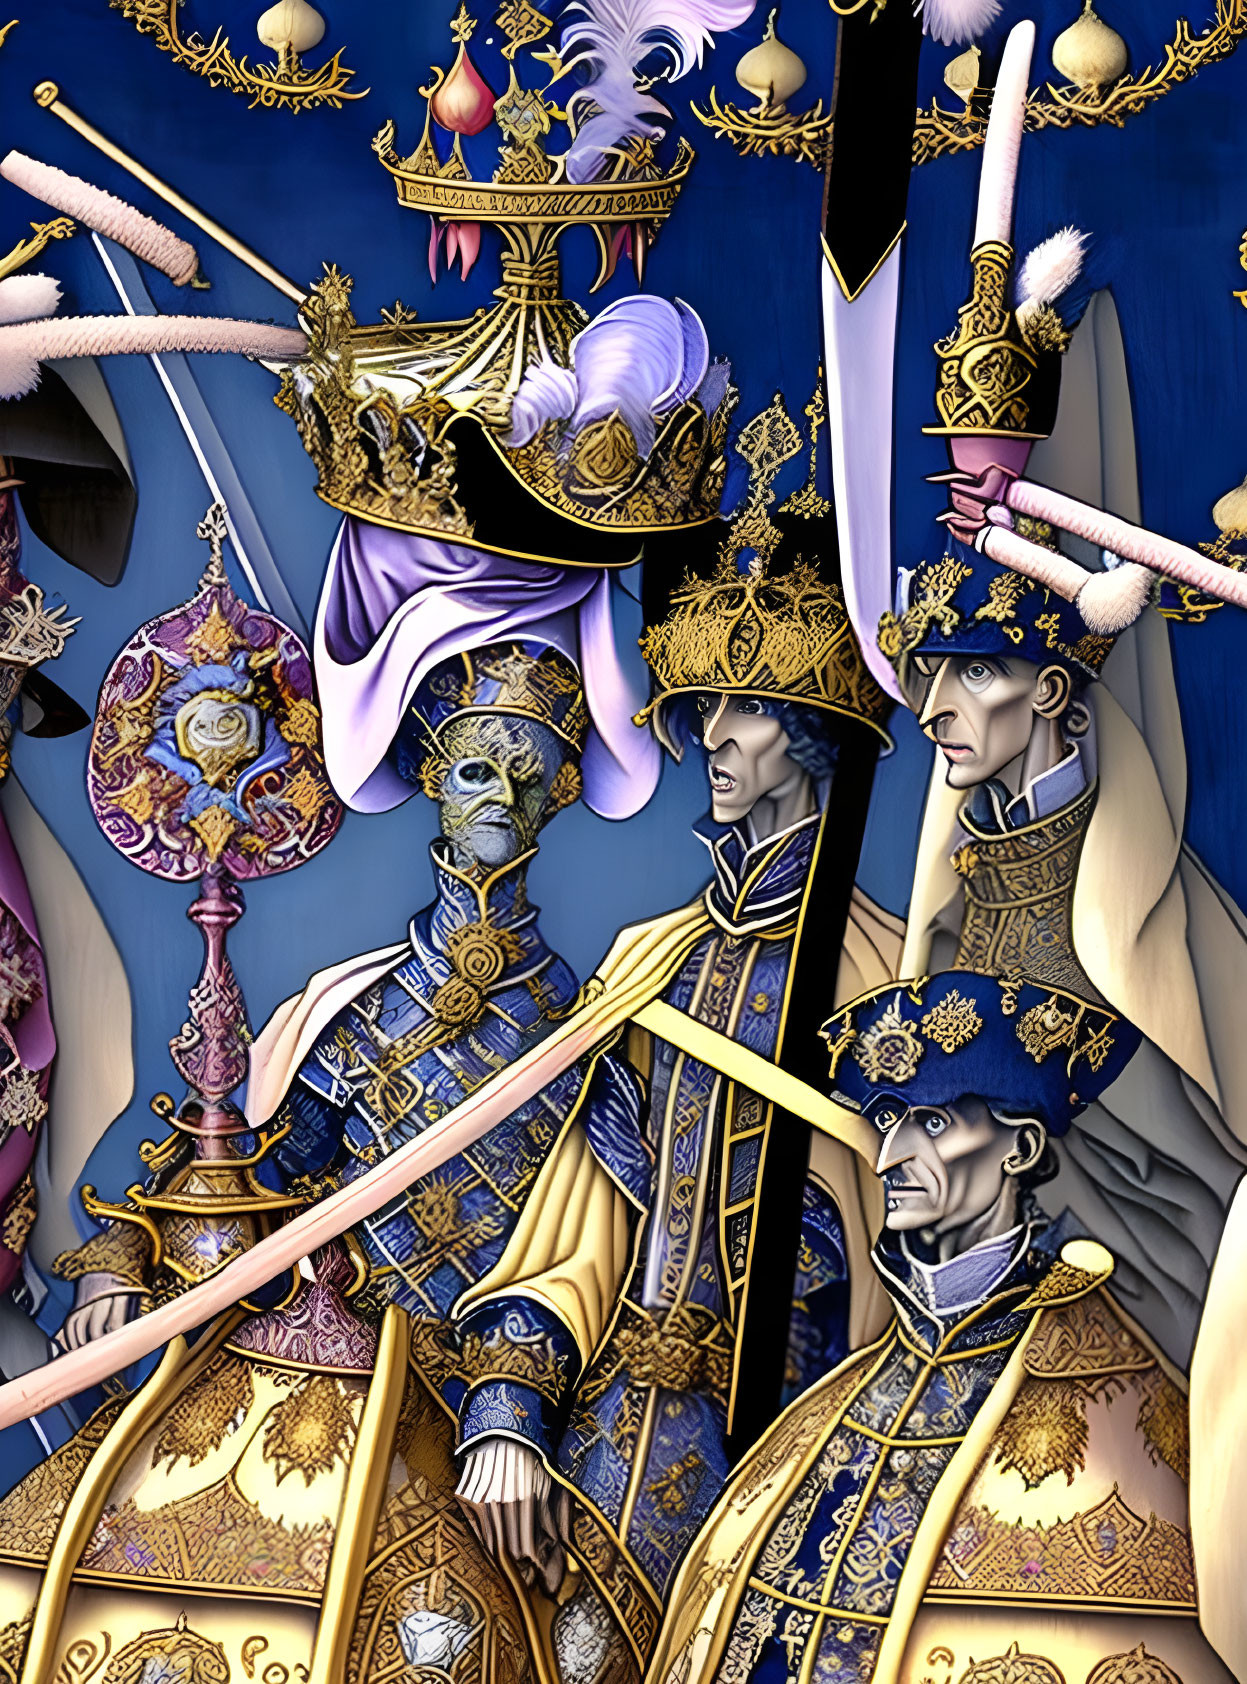 Regal skeletal figures in blue and gold armor on dark background